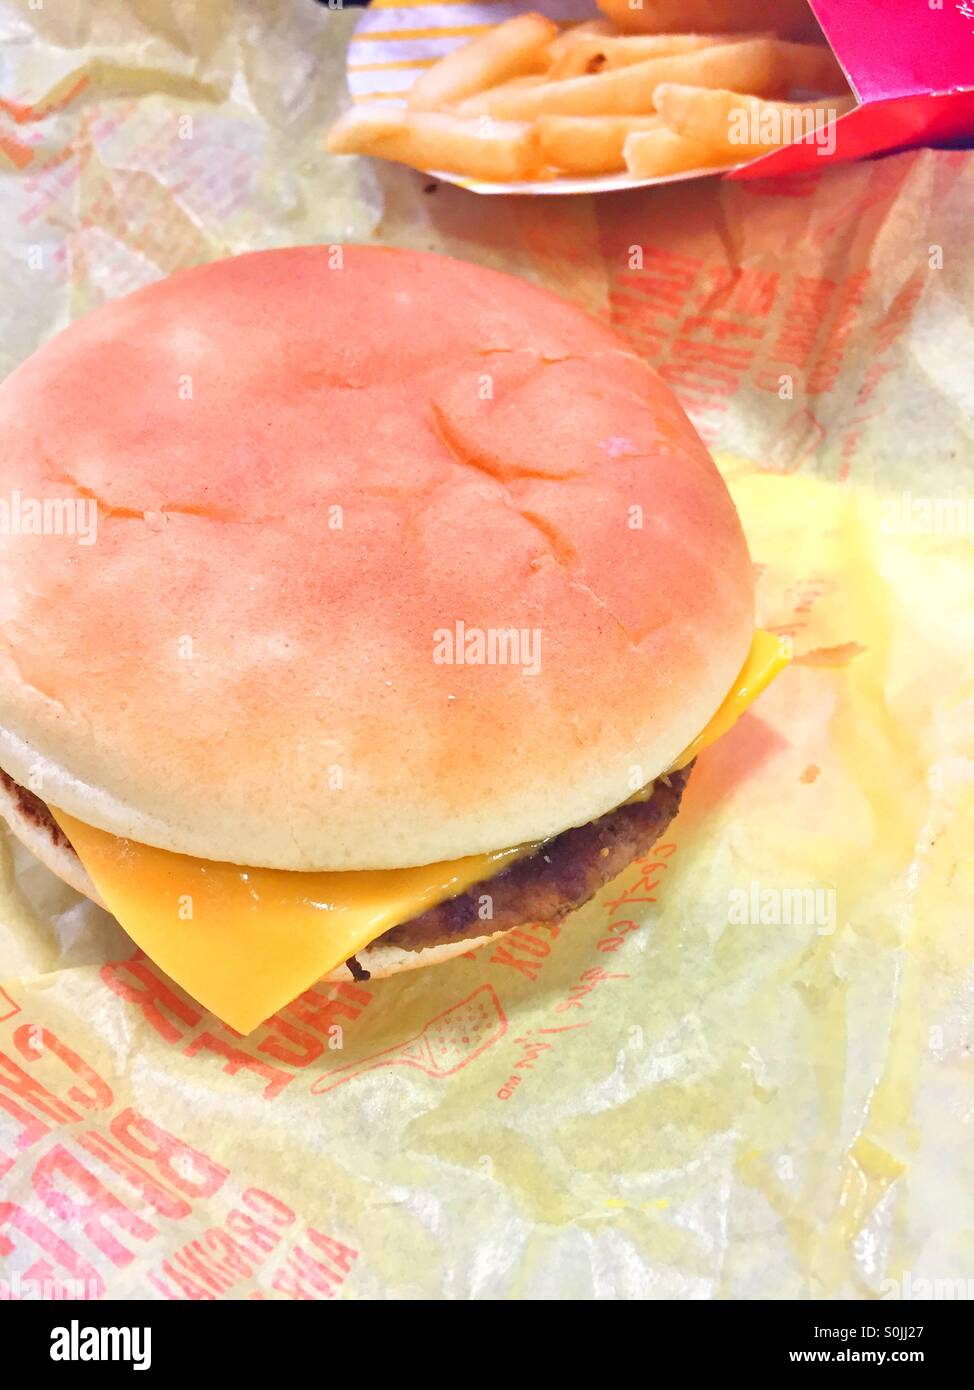 Cheeseburger and fries. Stock Photo